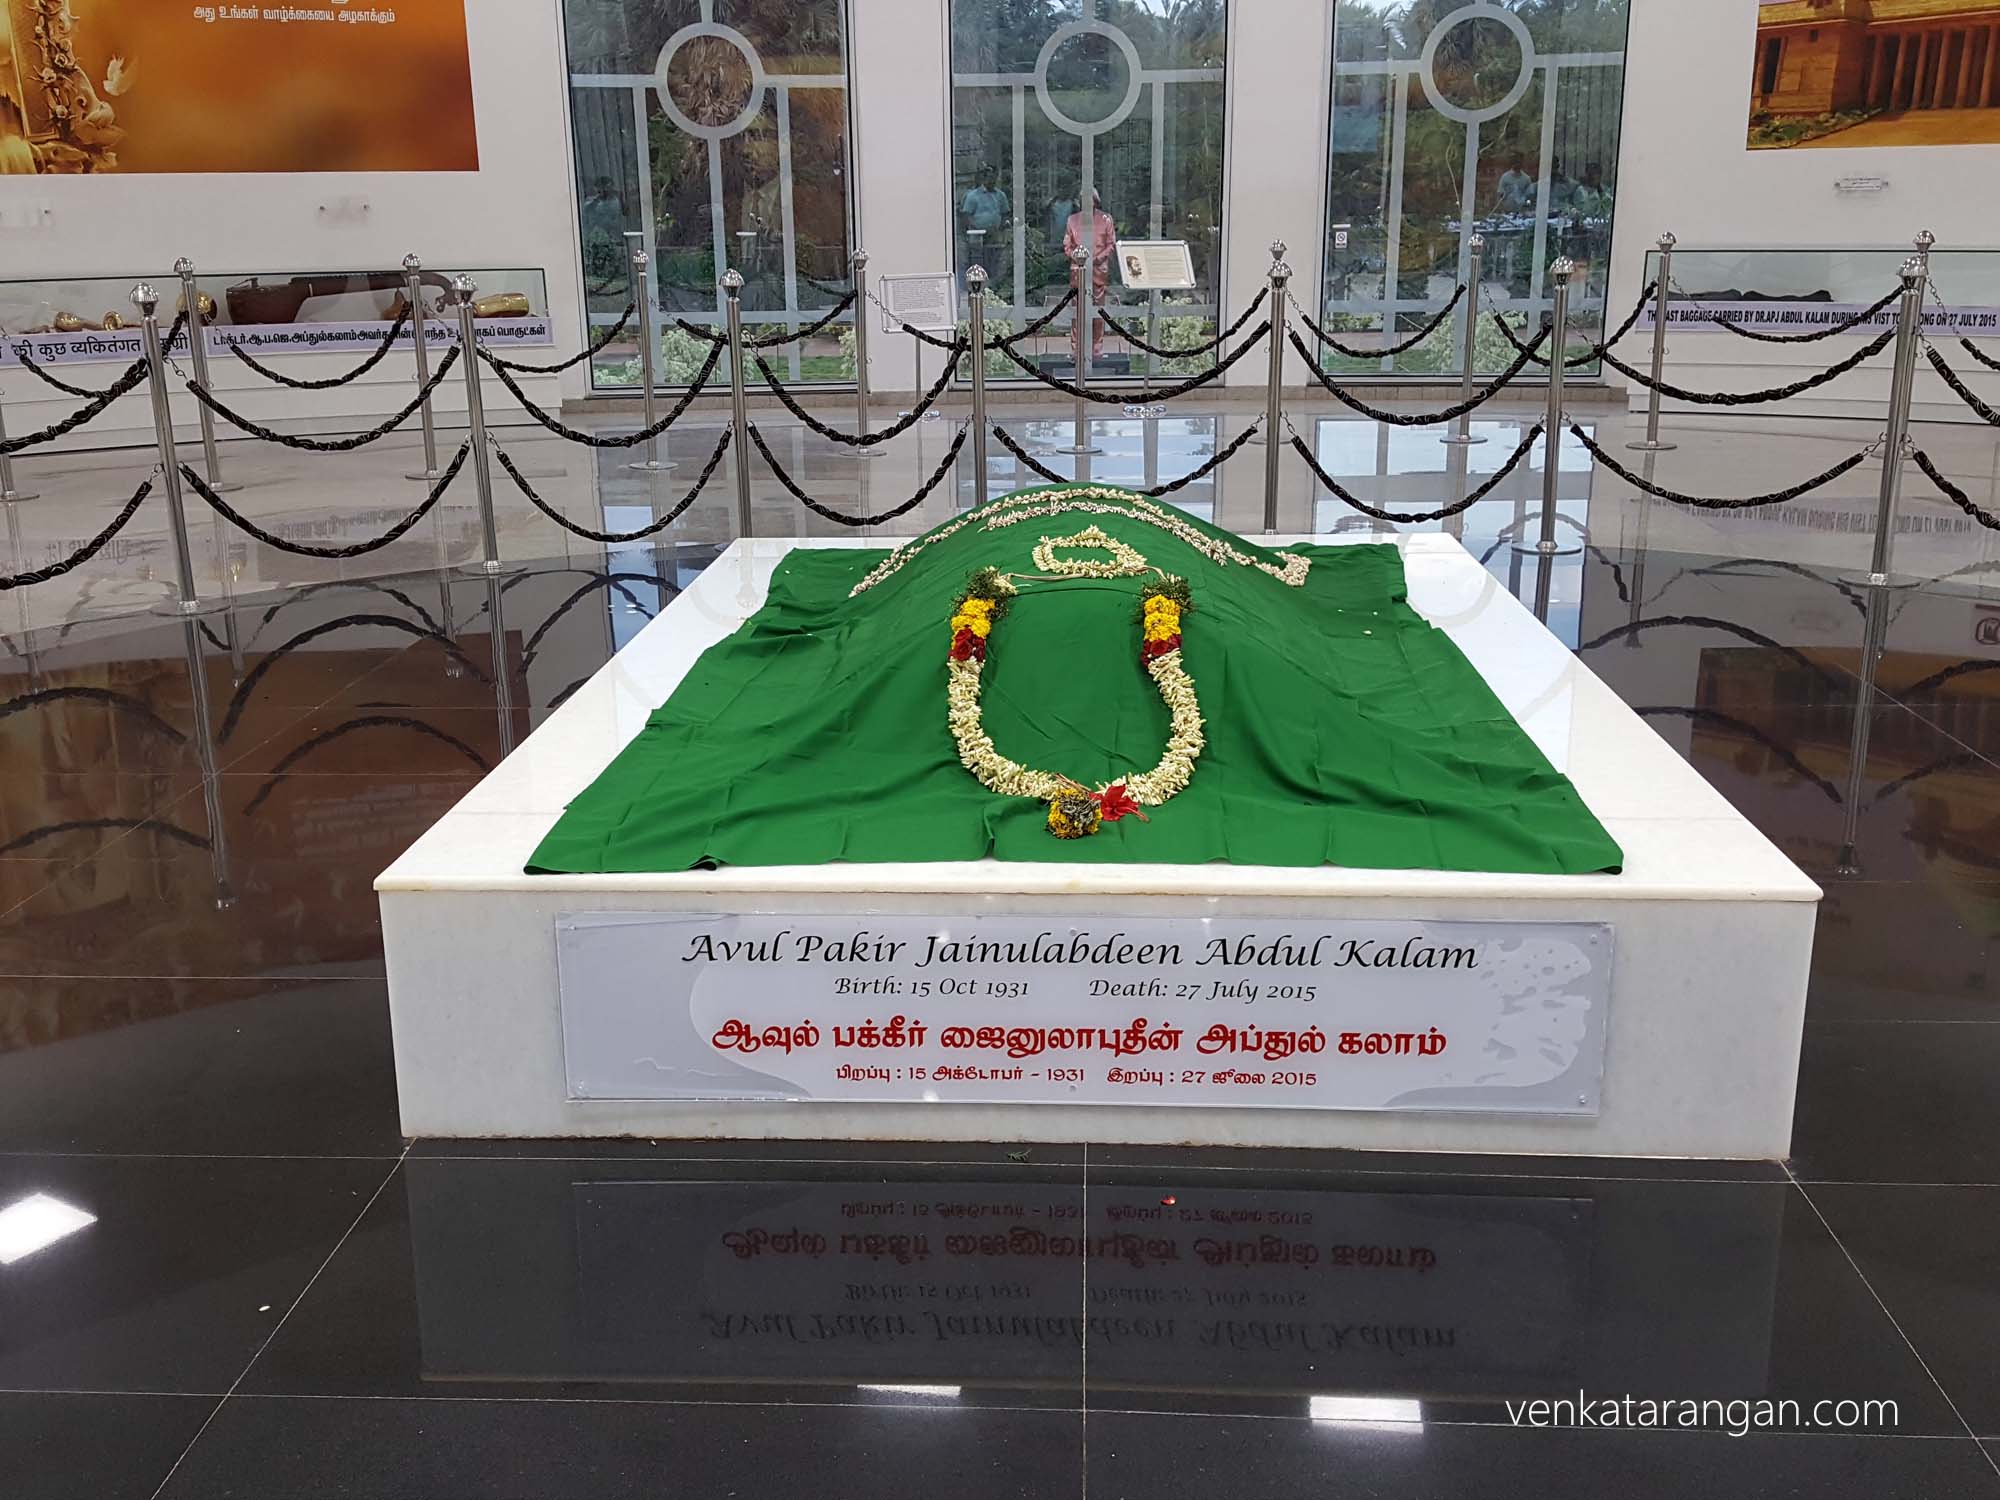 Dr Avul Pakir Jainulabdeen Abdul Kalam's final resting place